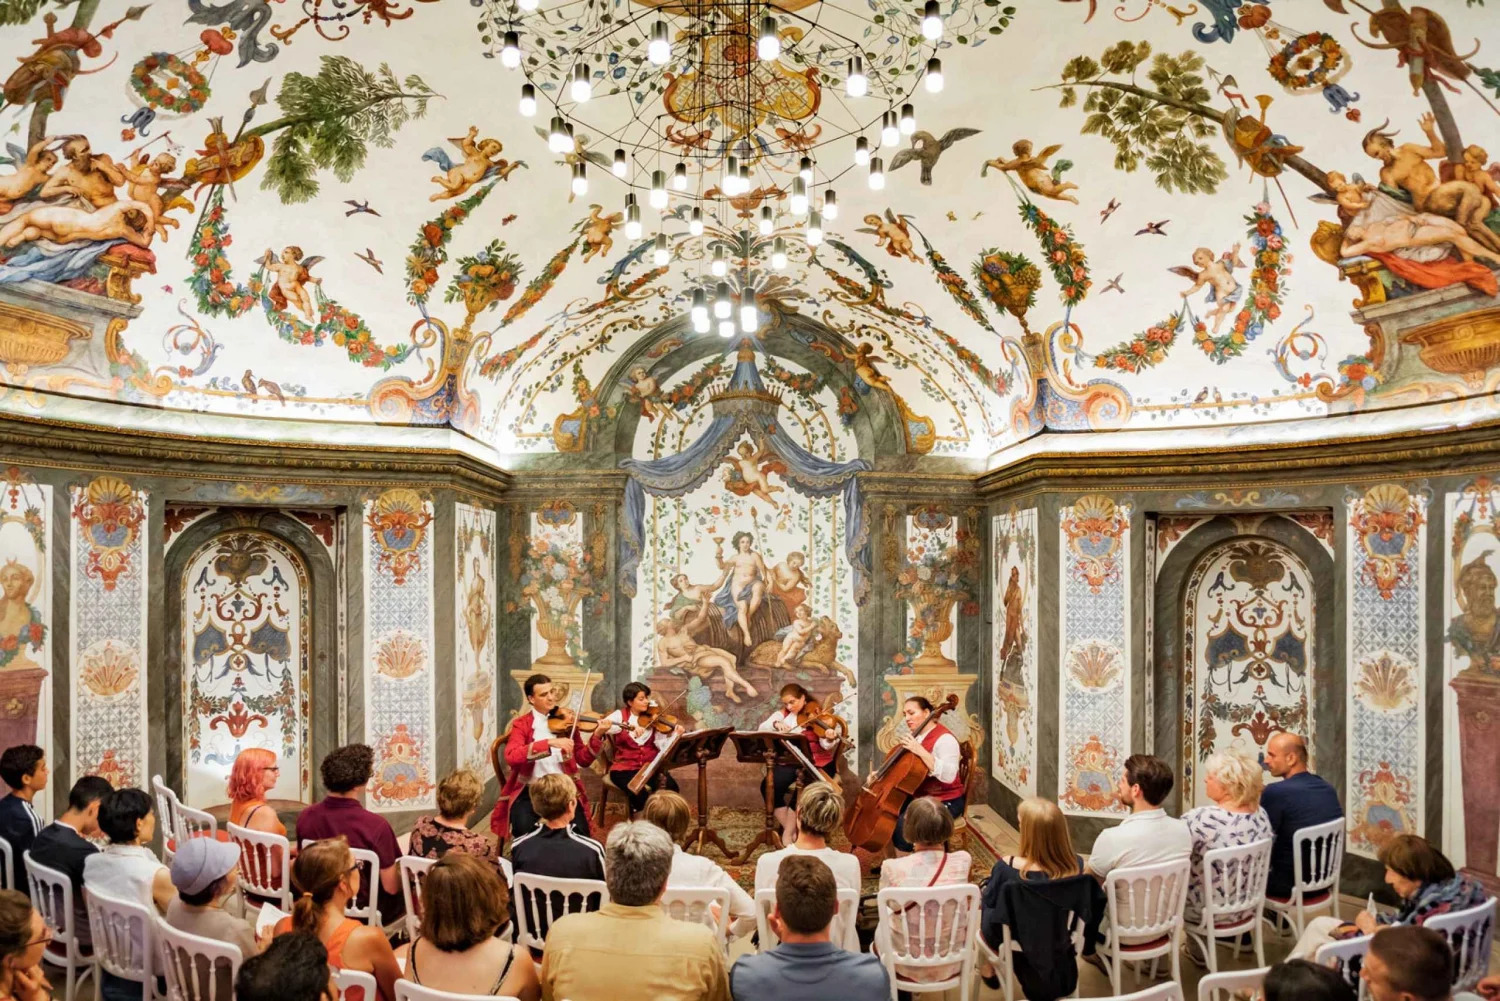 Mozarthaus Vienna – A Travel Guide To Mozart’s House